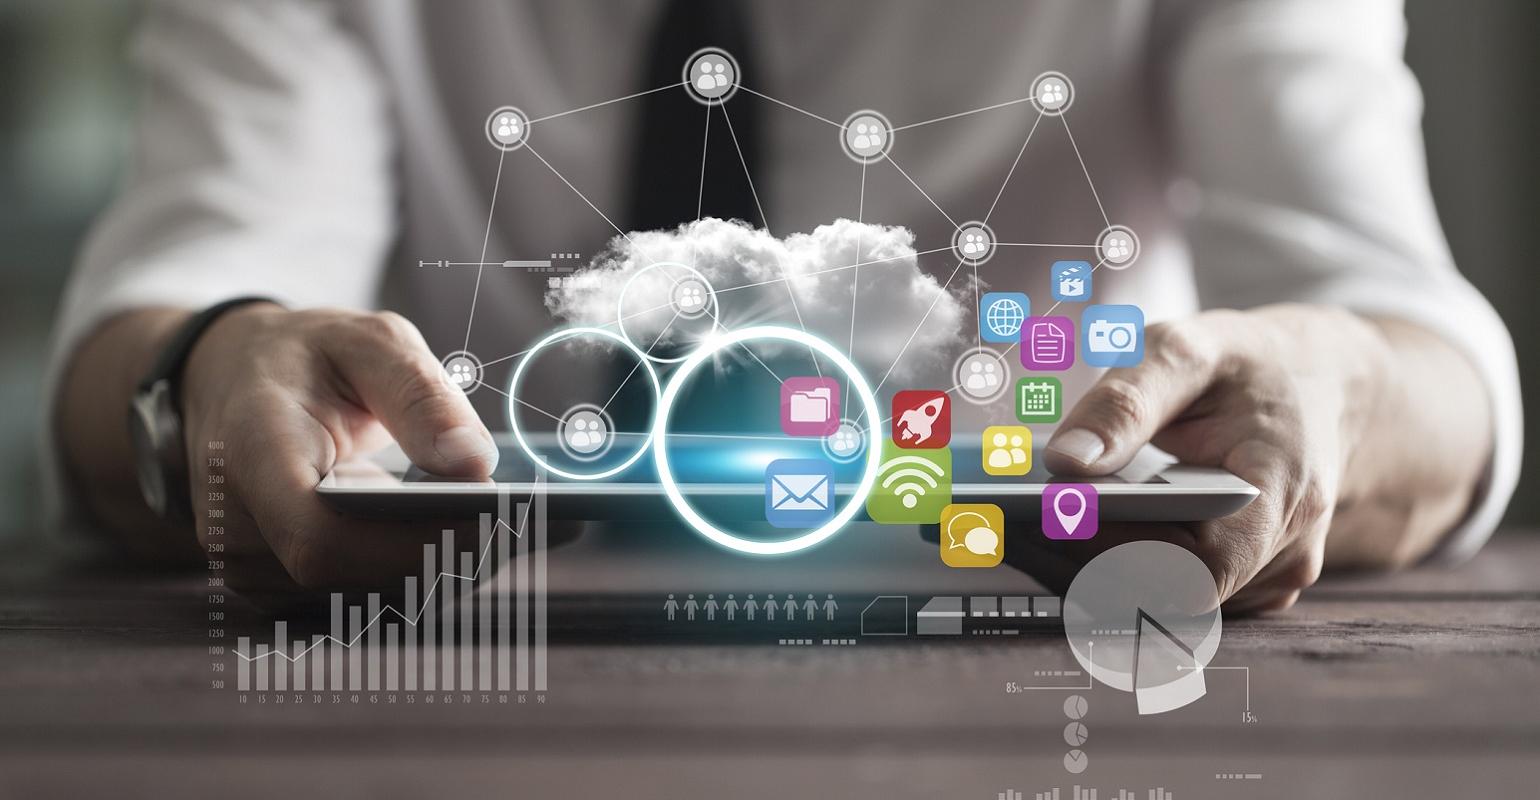 Deploying Applications On Cloud Computing